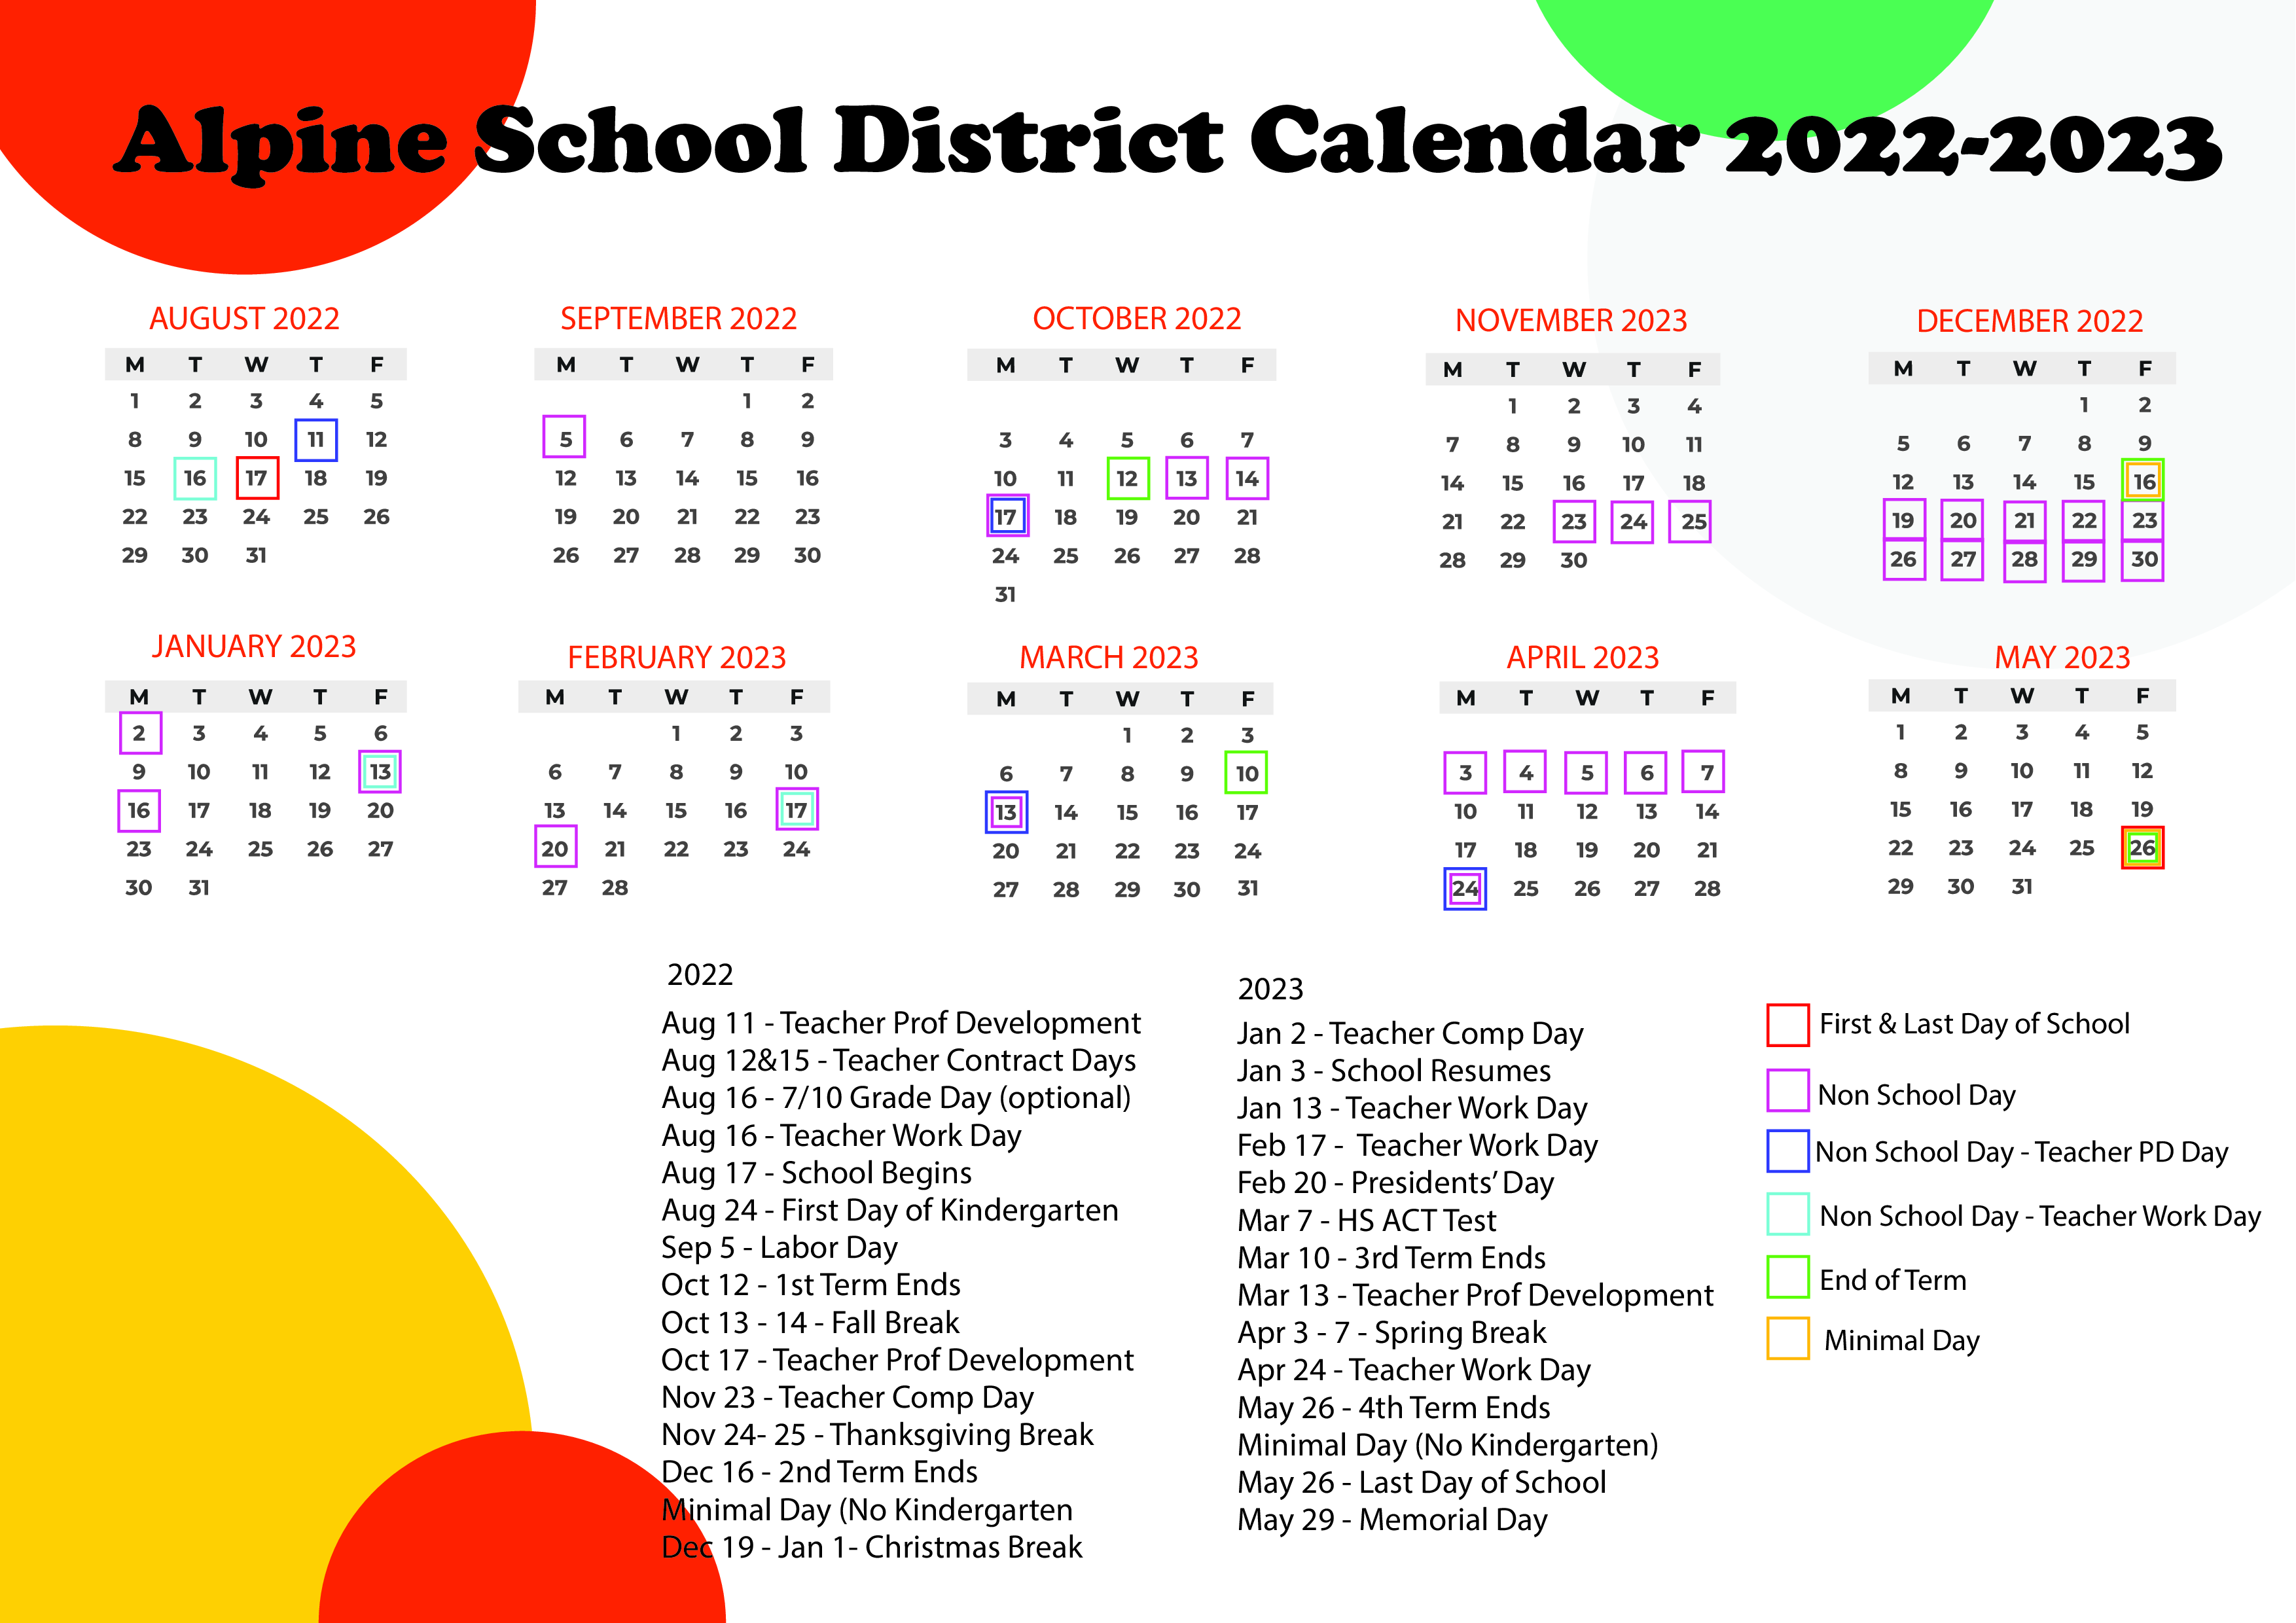 Alpine School District Calendar with Holidays 2022 2023